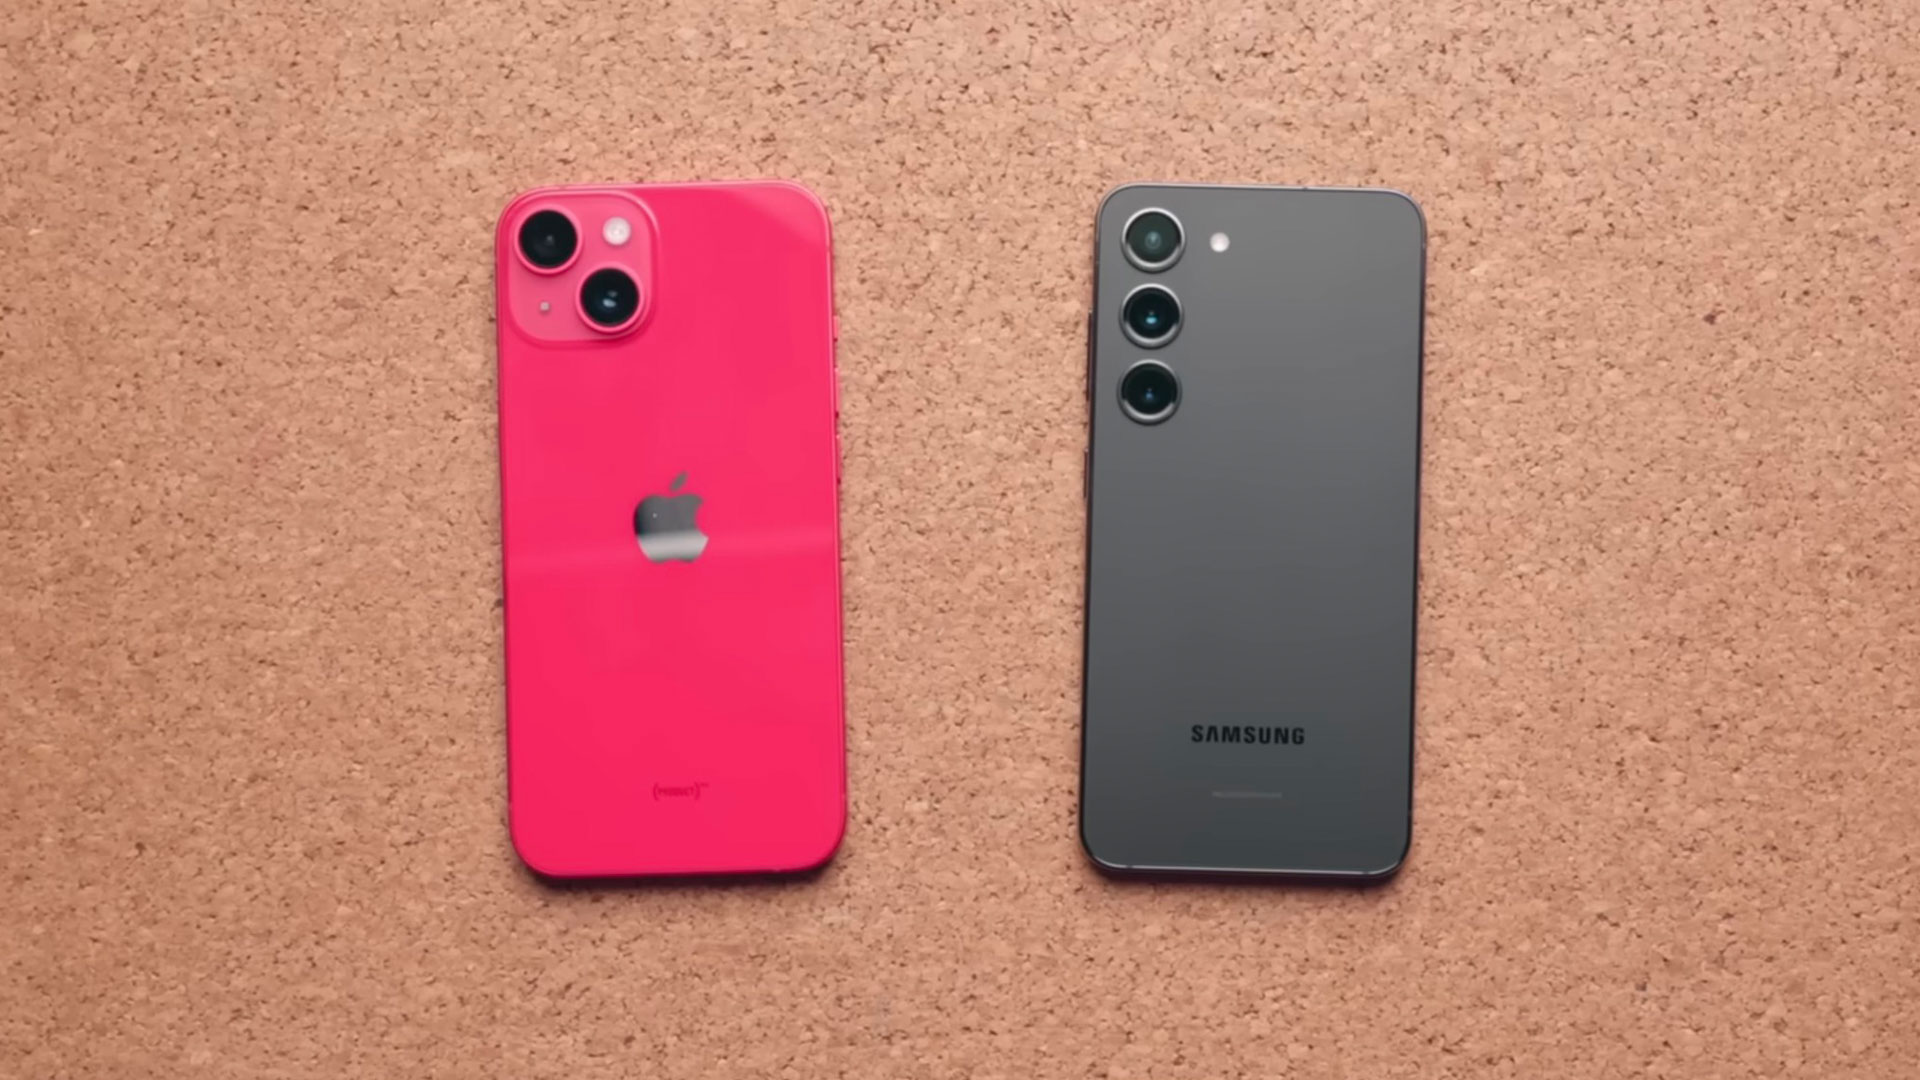 Samsung Galaxy S23 vs iPhone 14